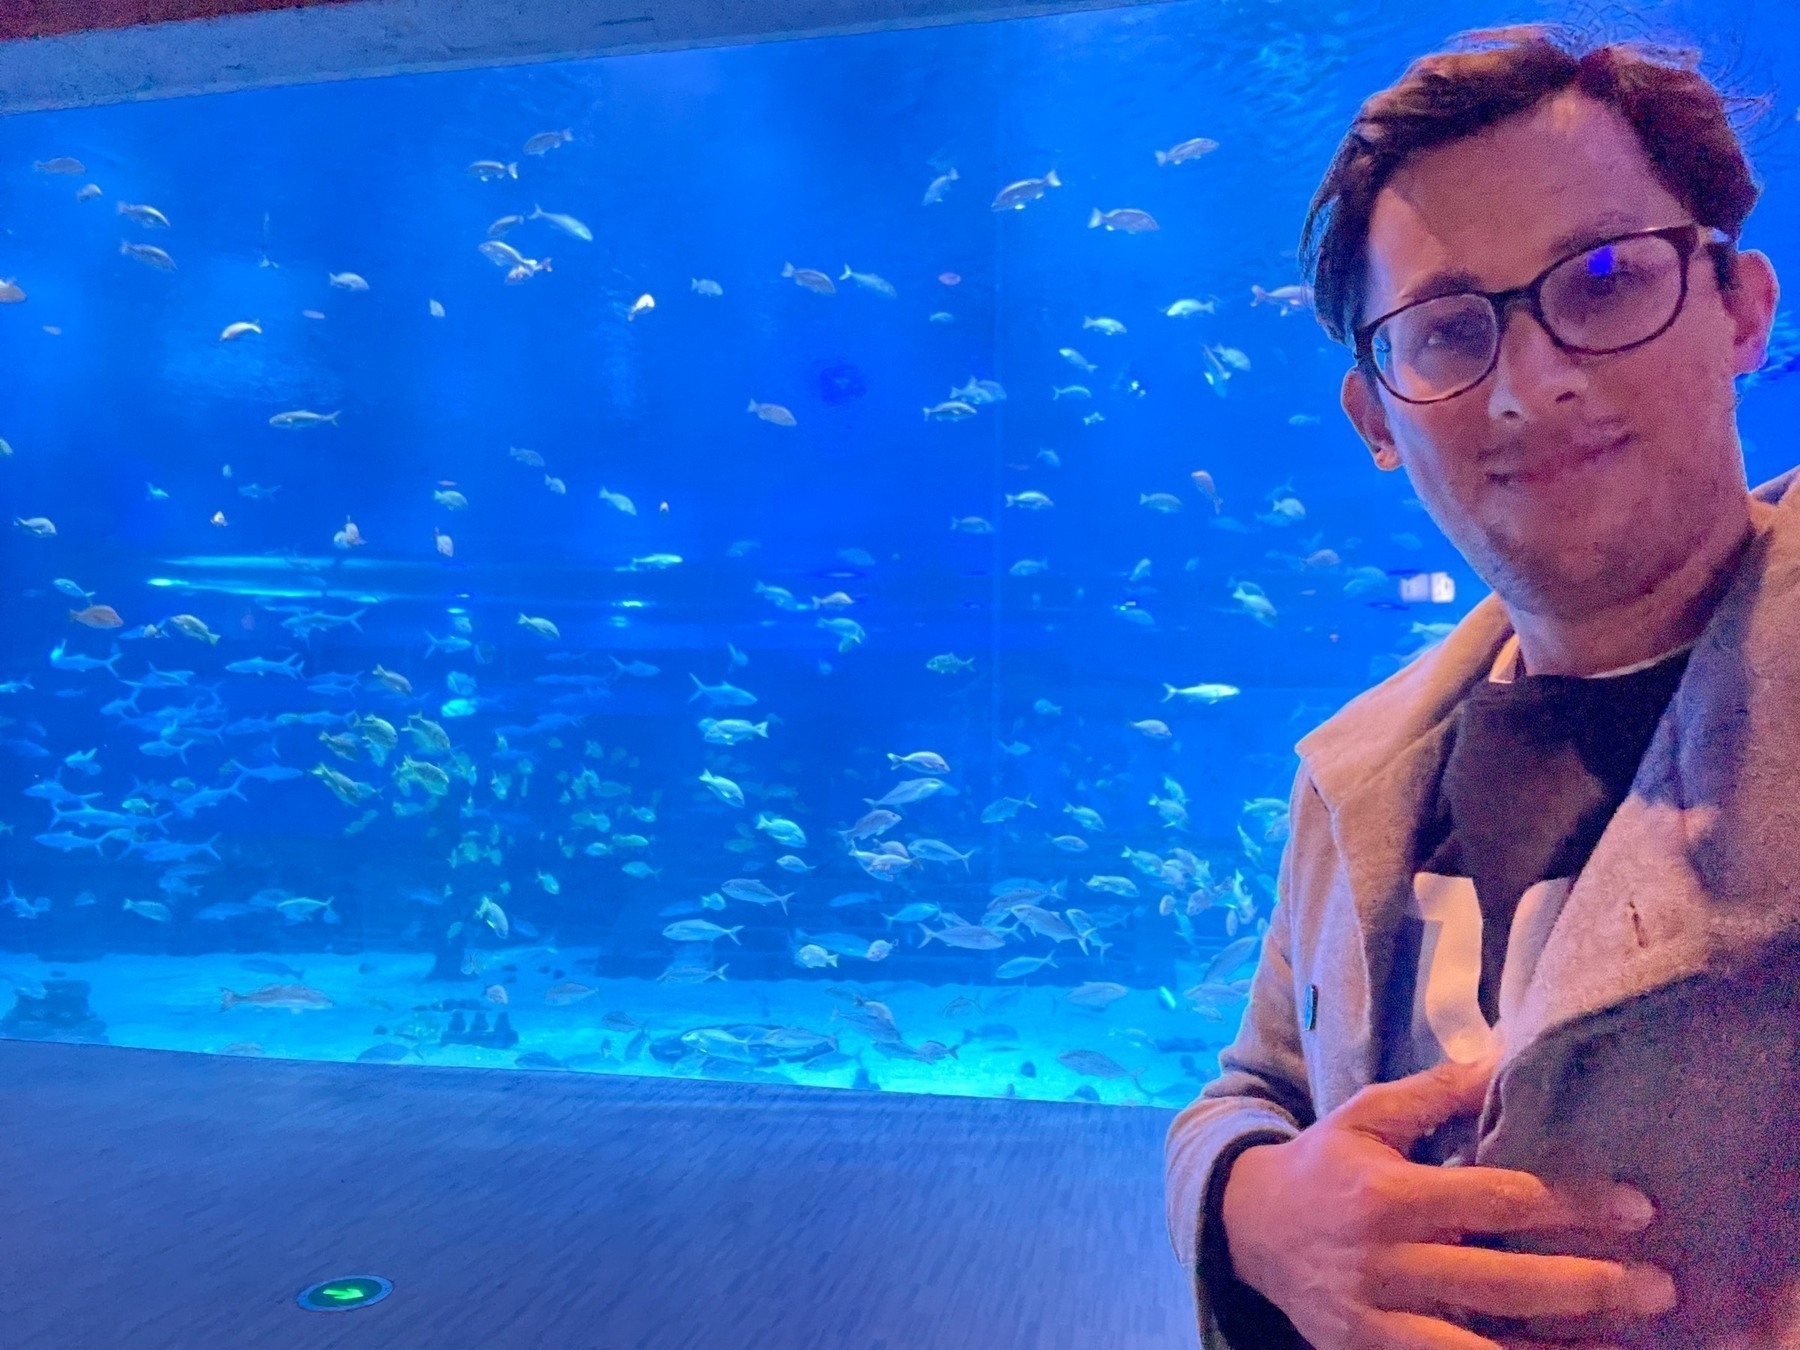 Selfie in front of a large aquarium tank 